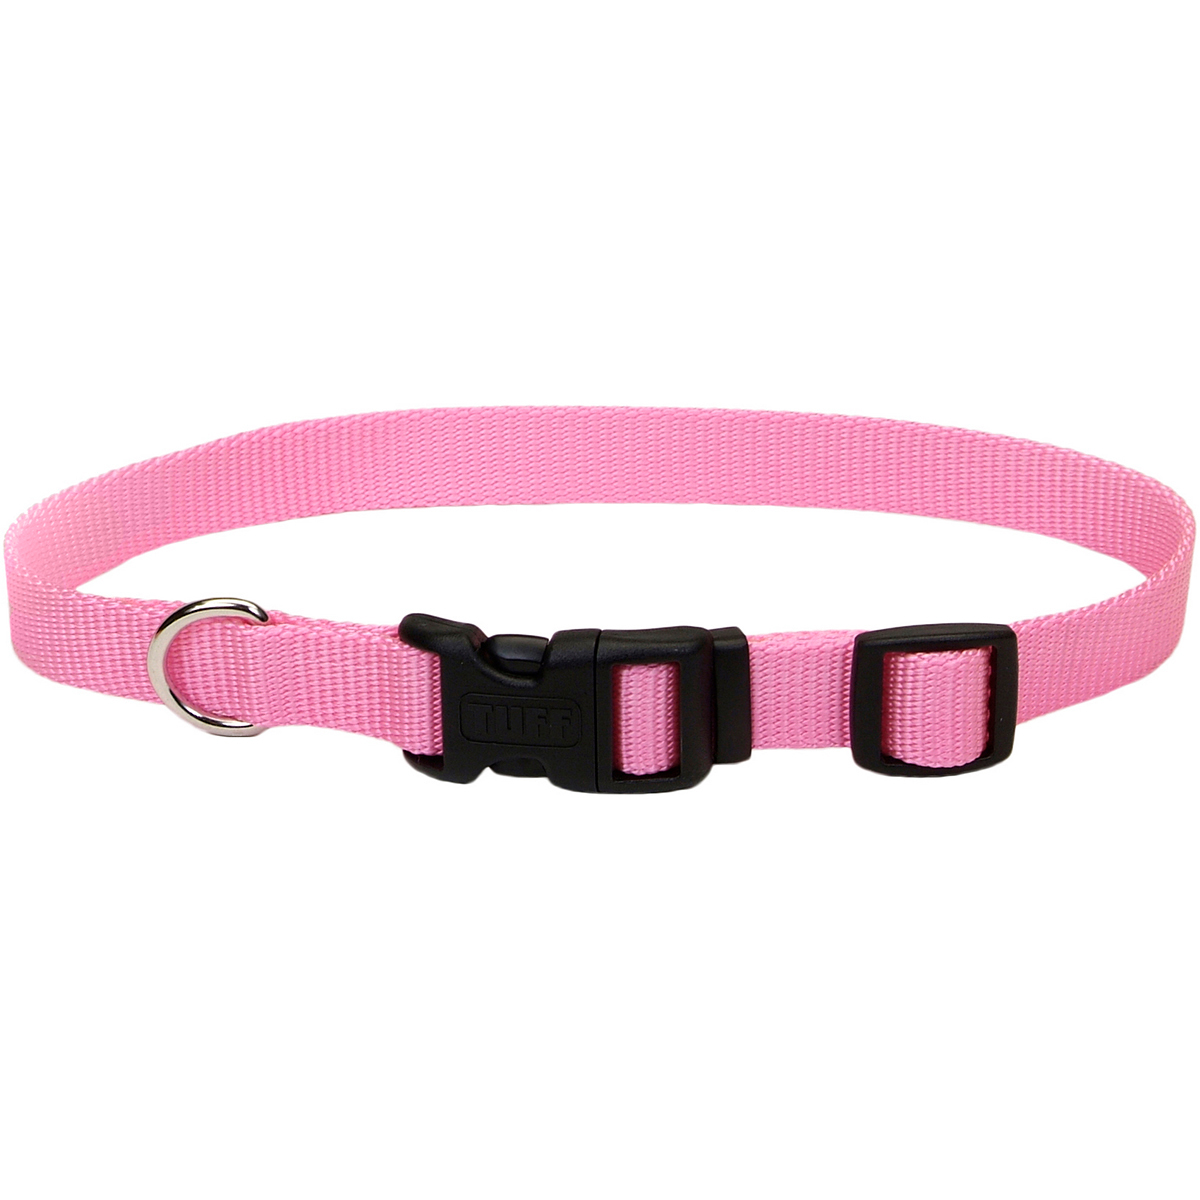 0.75 X 14 - 20 In. Adjustable Nylon Dog Collar With Tuff Buckle, Pink